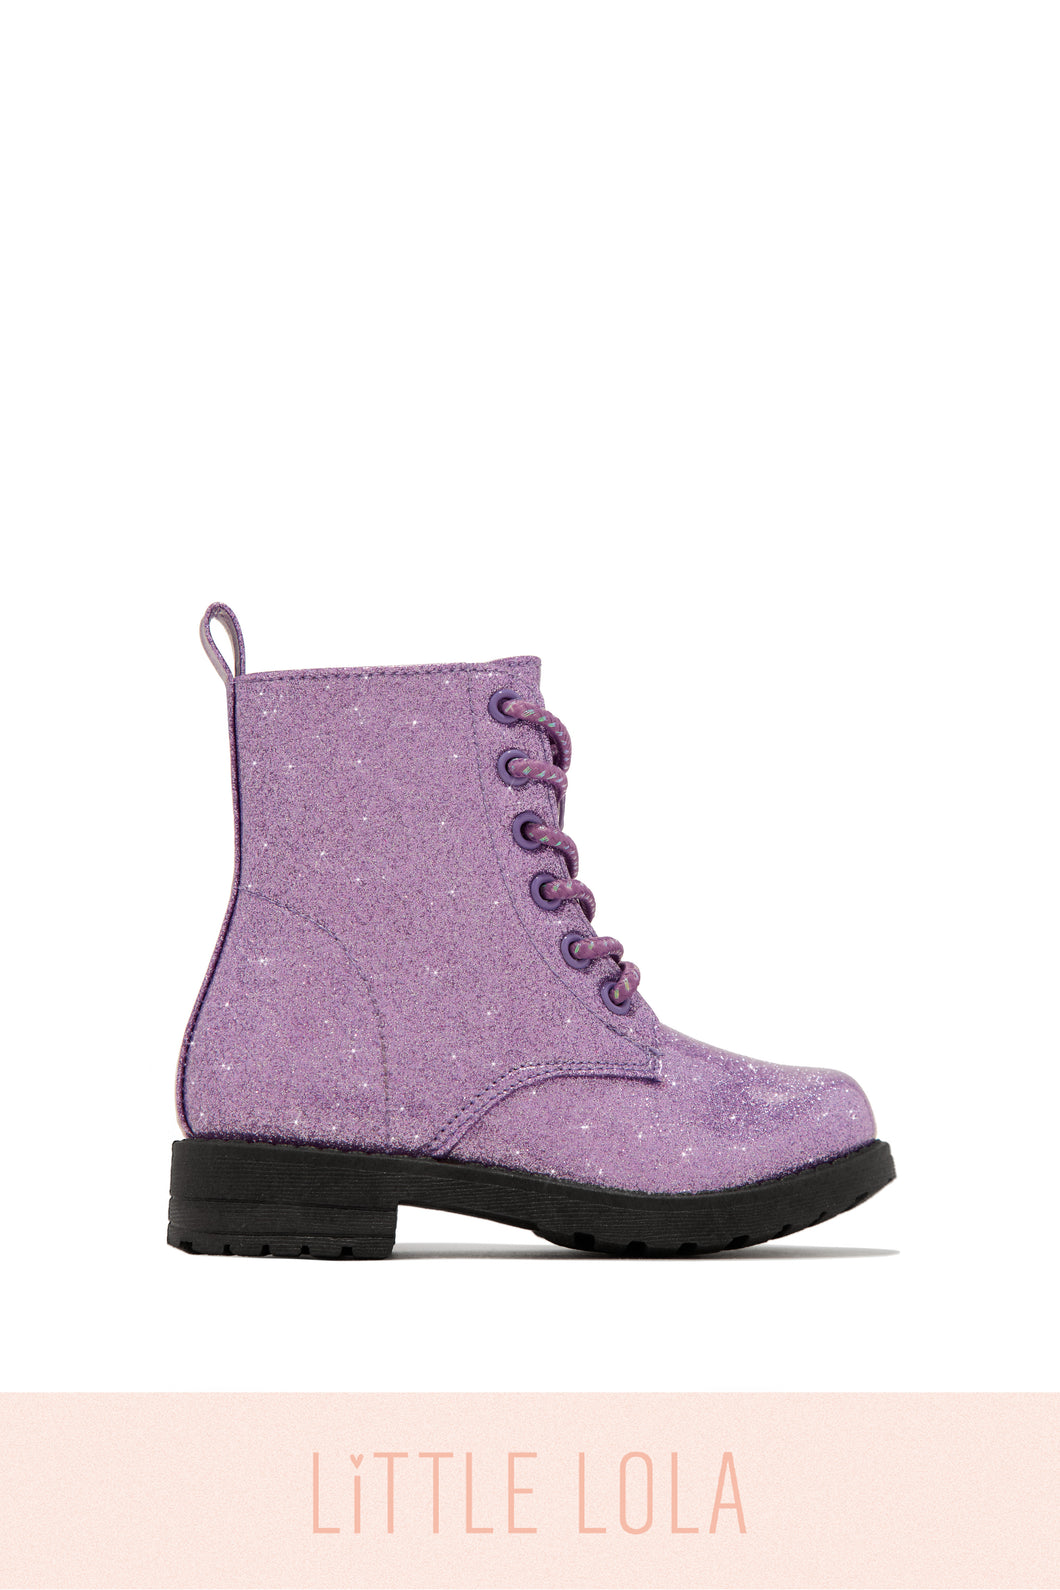 Mini Attitude Kids Glitter Lace Up Combat Boots - Purple